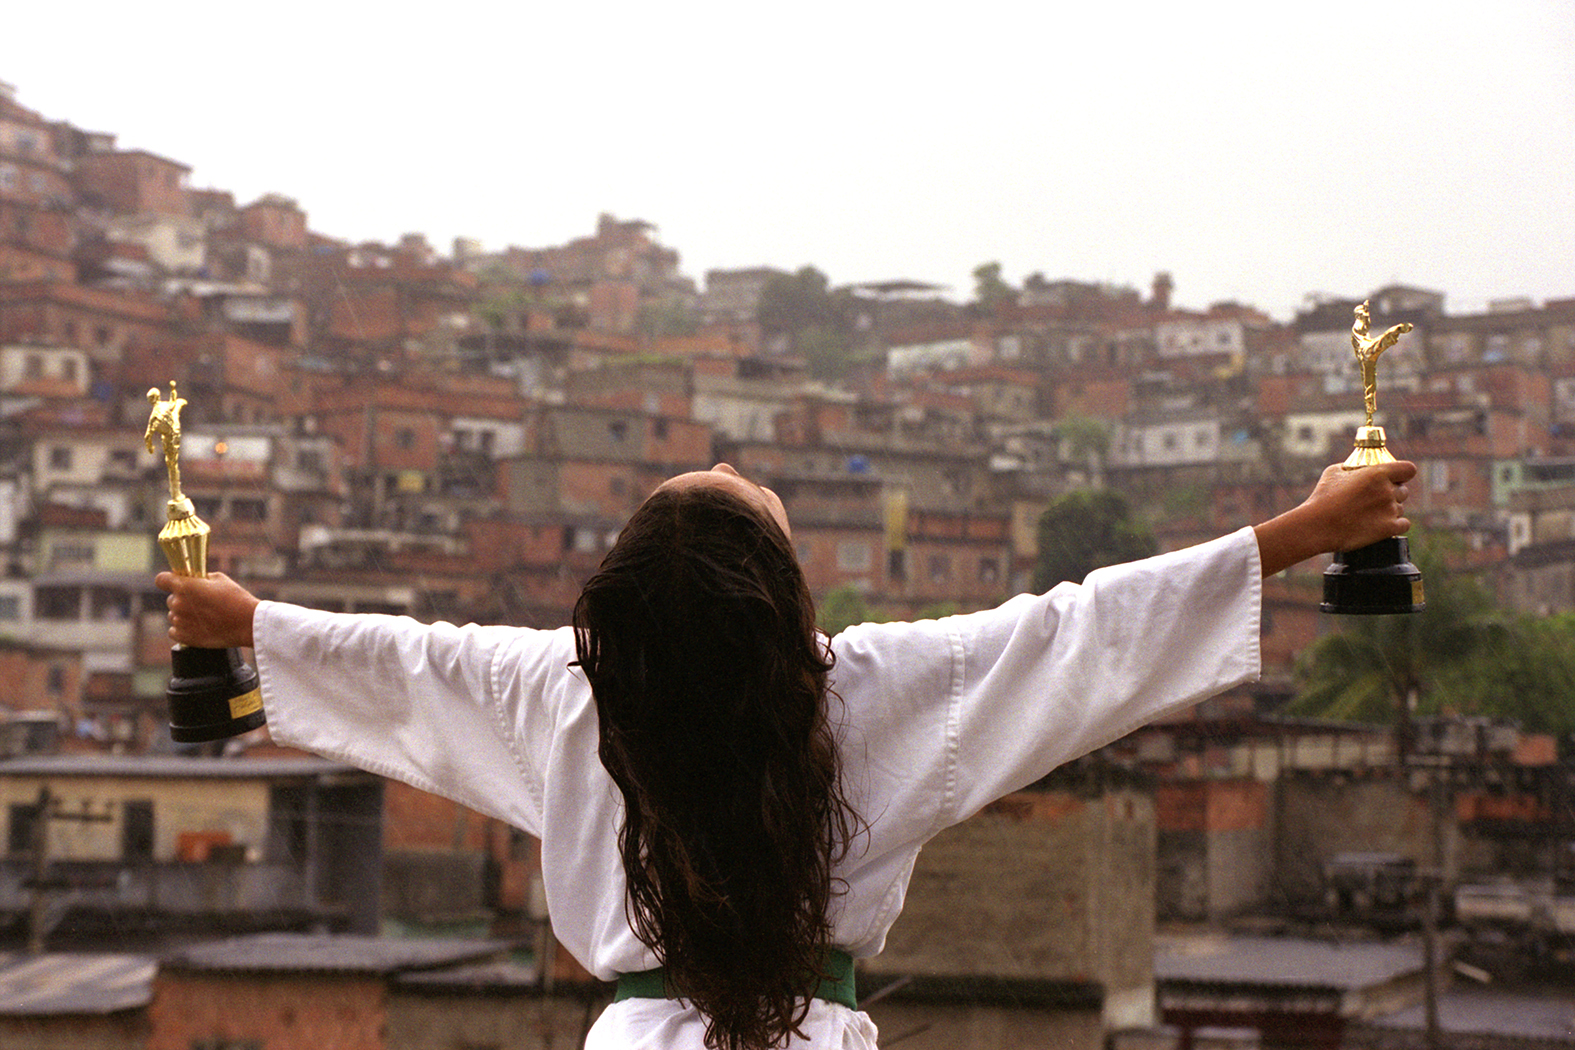 Fotografia publicada no Portal Viva Favela, na matéria "Carateca premiada", realizada em 2002. Foto: Rodrigues Moura